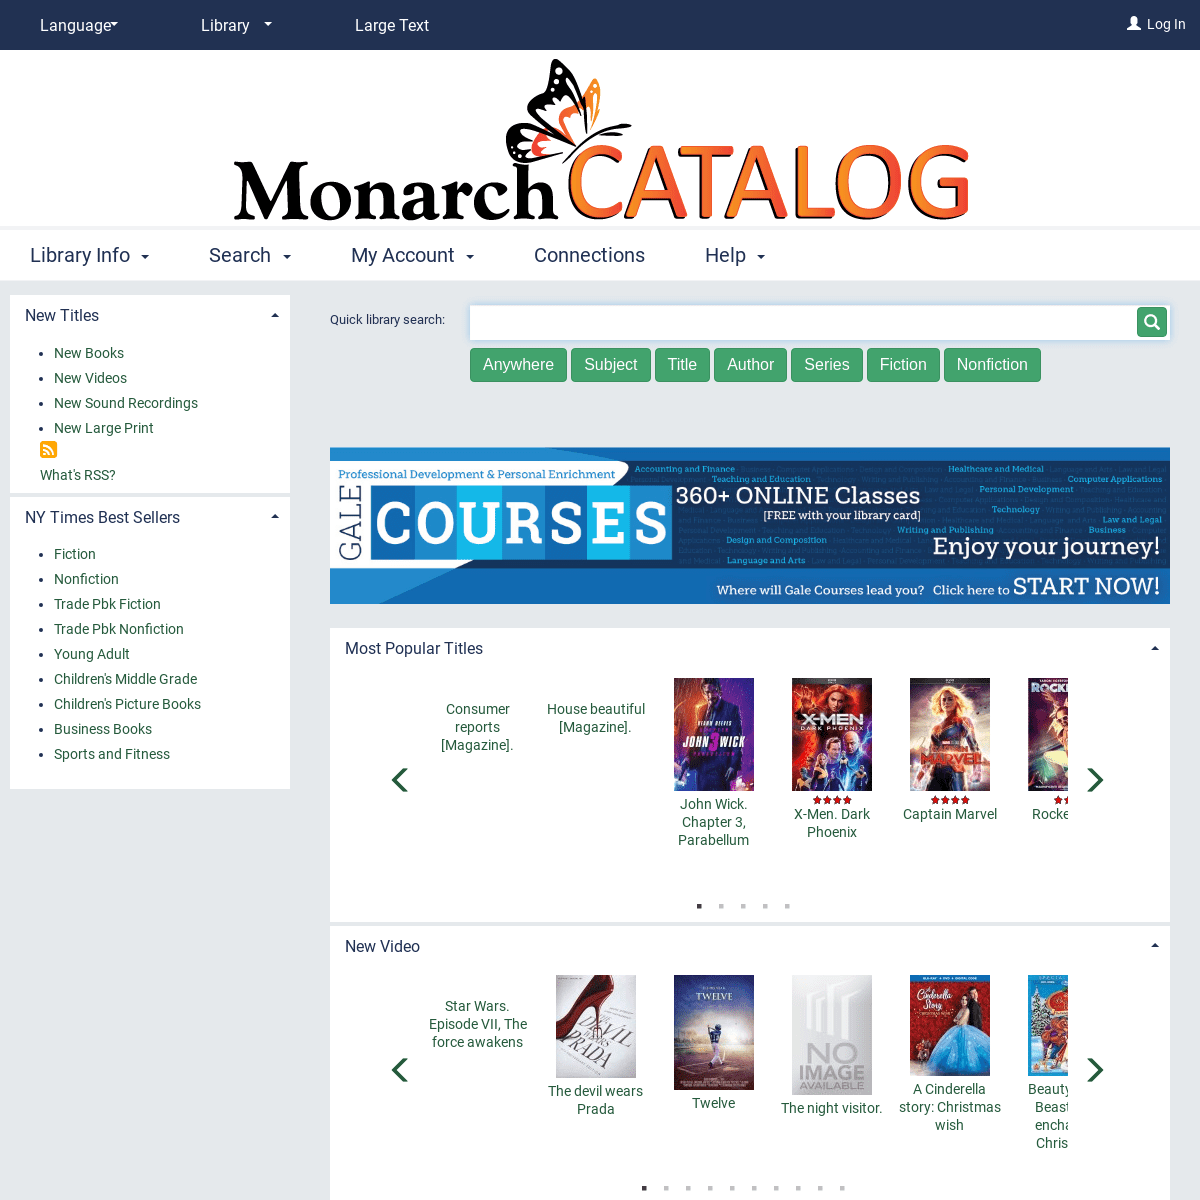 A complete backup of monarchcatalog.org